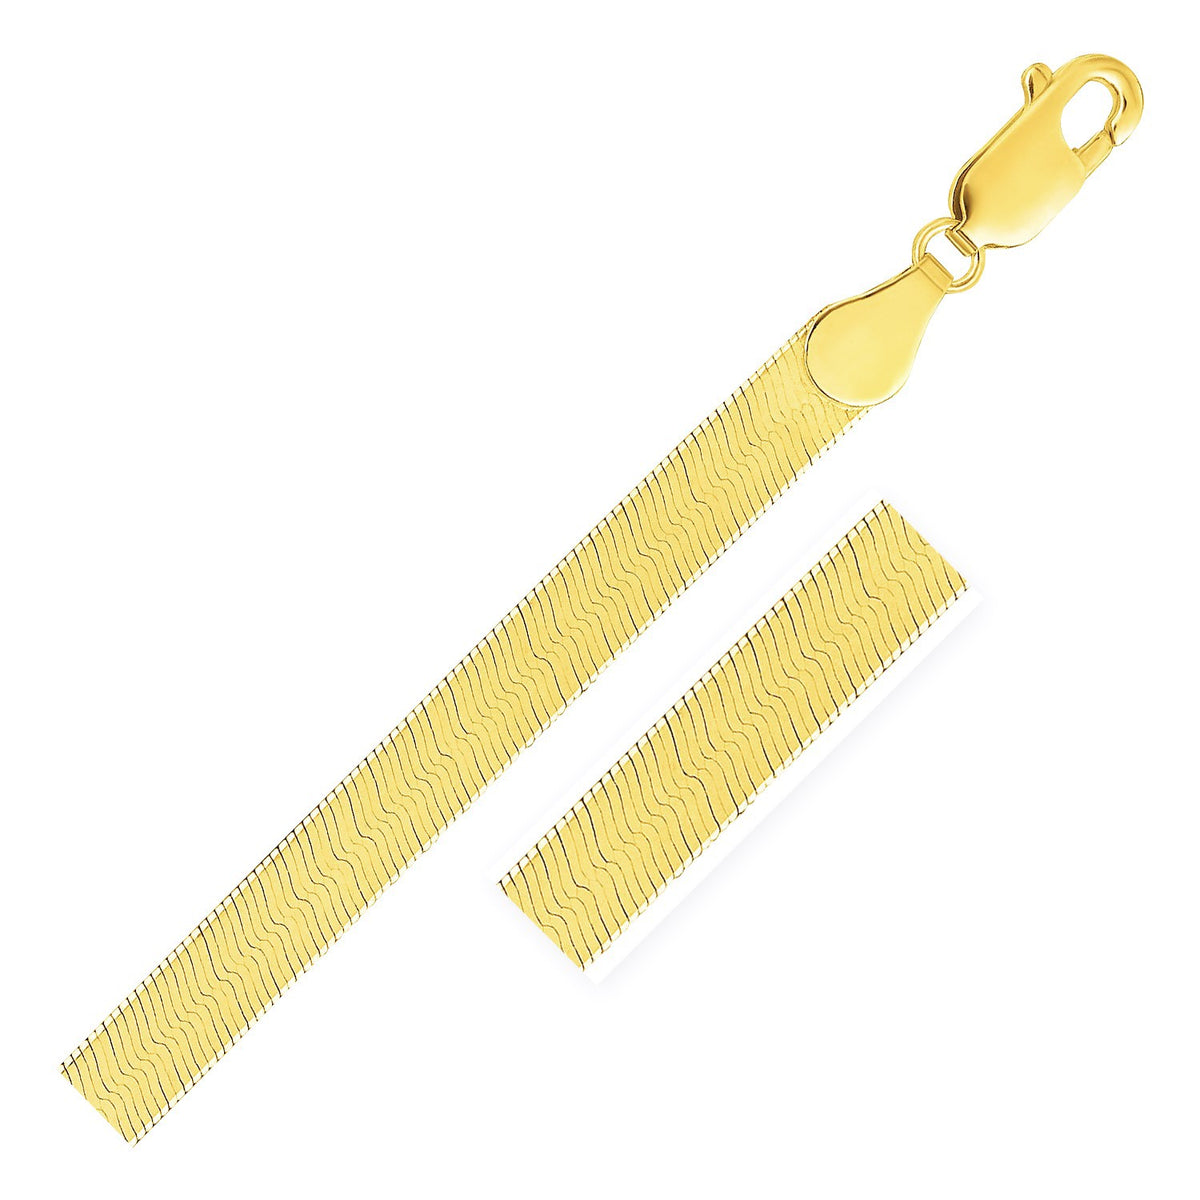 Super Flex Herringbone Chain - 14k Yellow Gold 6.00mm